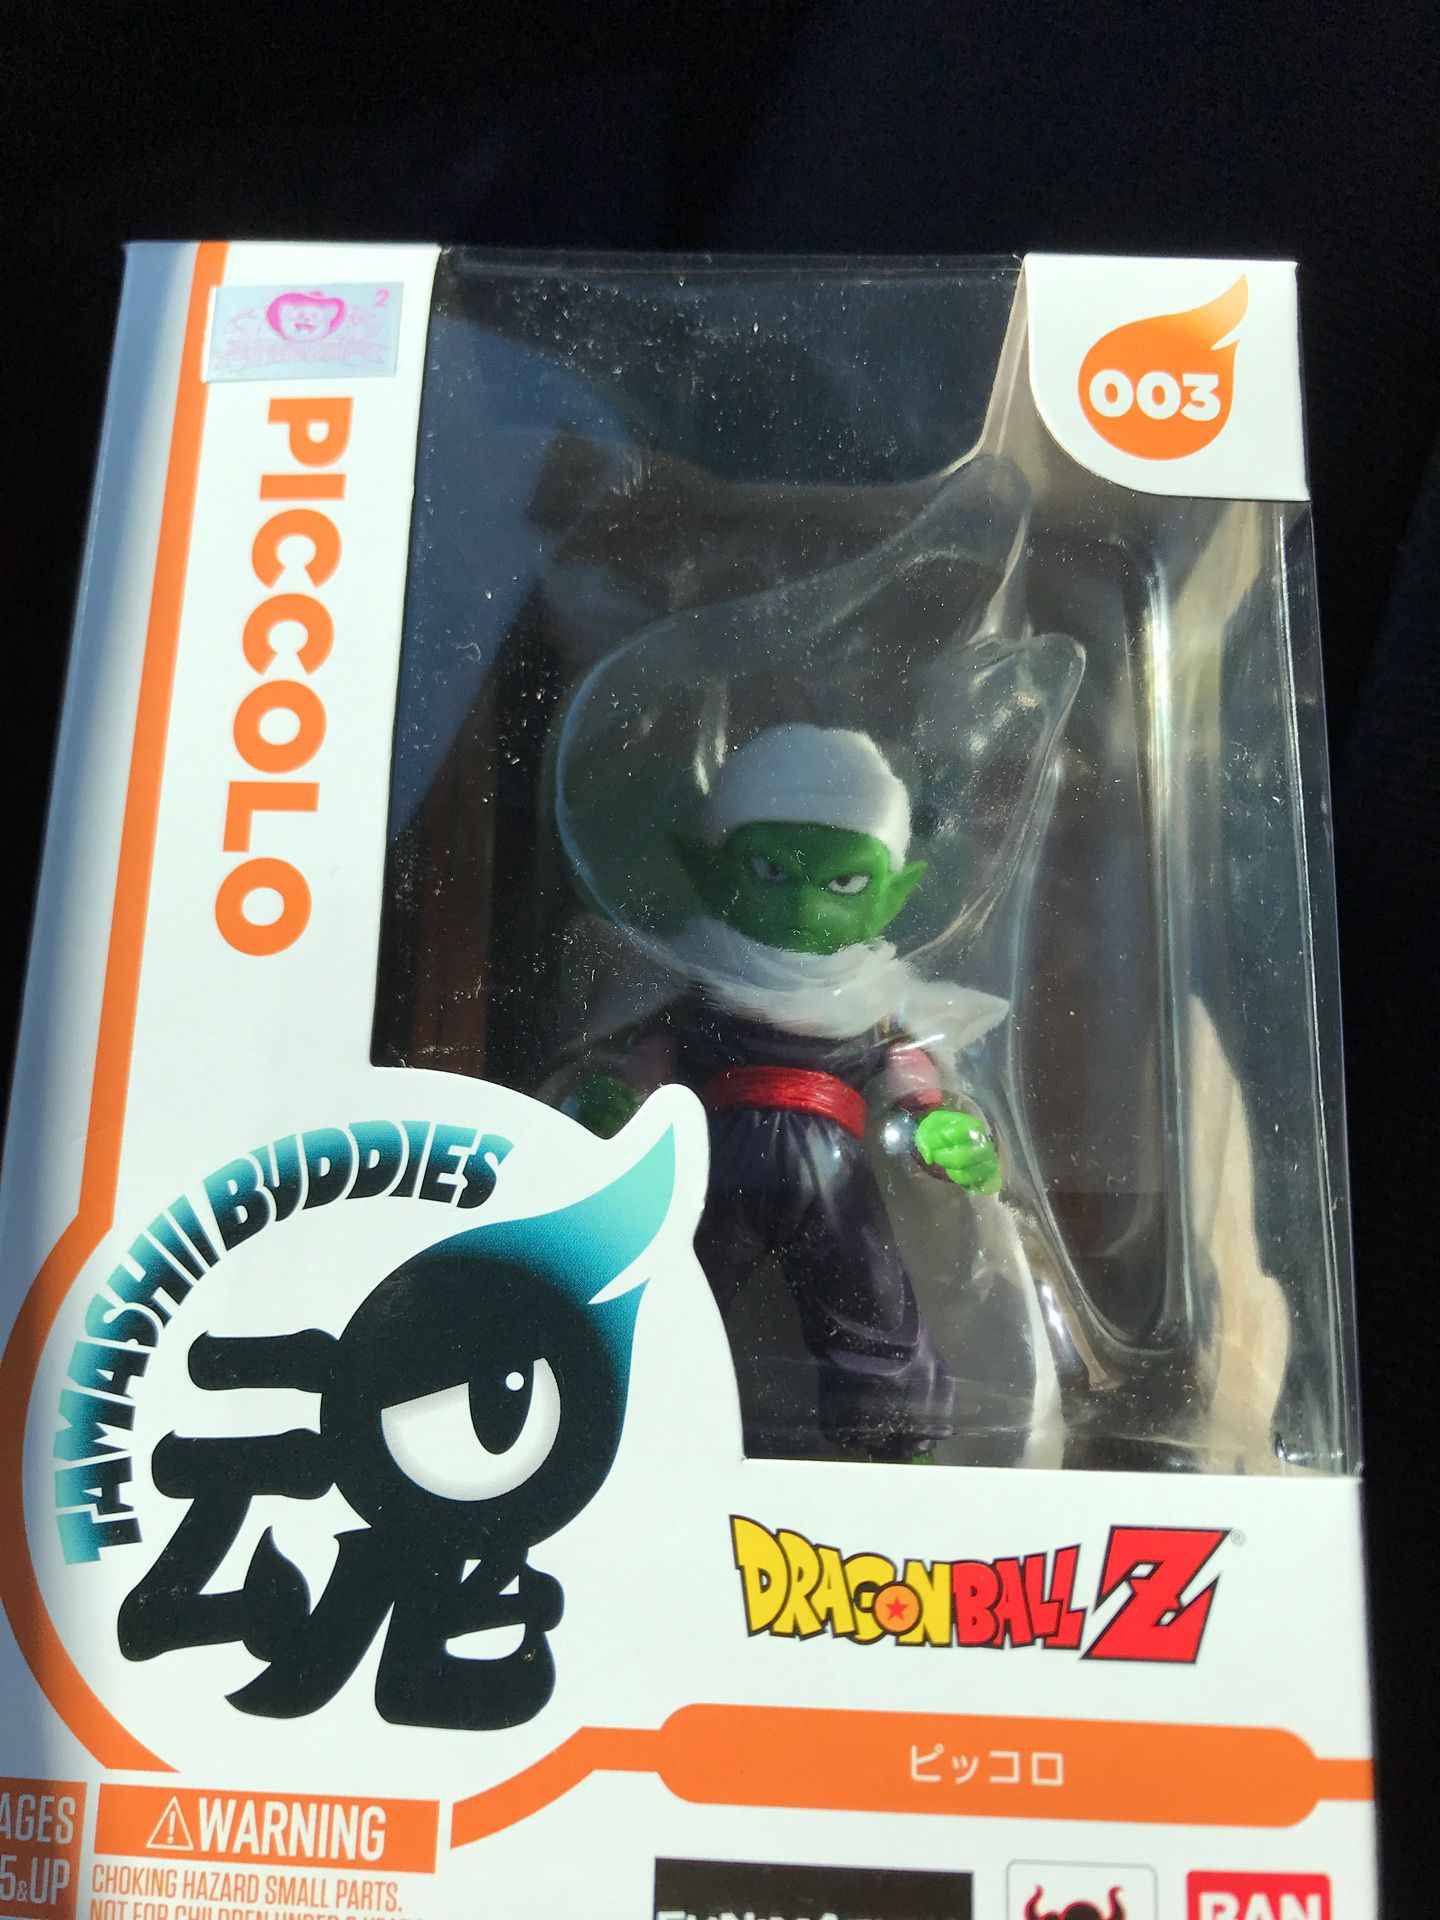 Bandai Tamashi Buddies Dragonball Z 003 Piccolo figure